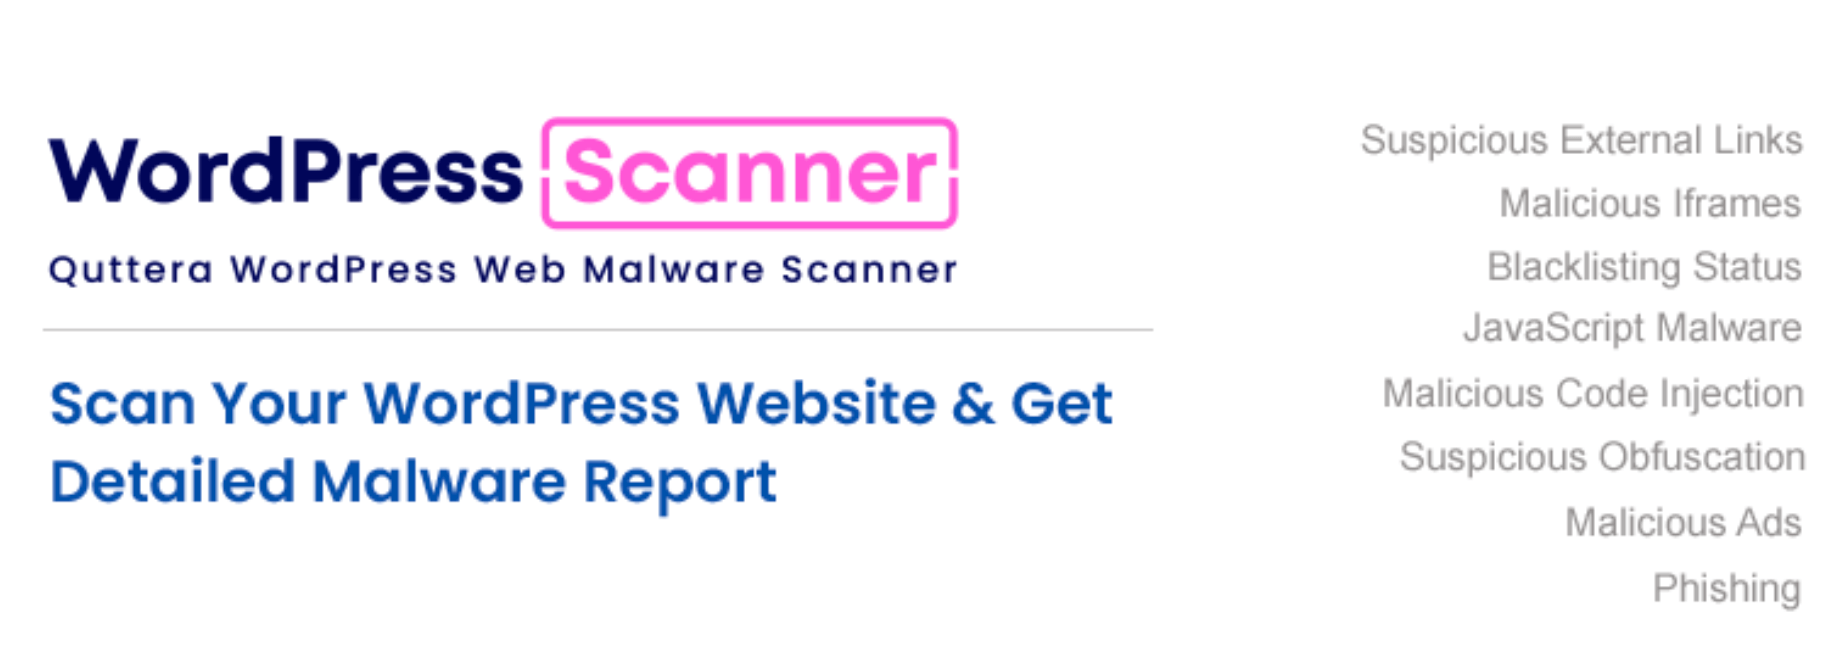 "quttera web malware scanner" scan your websites